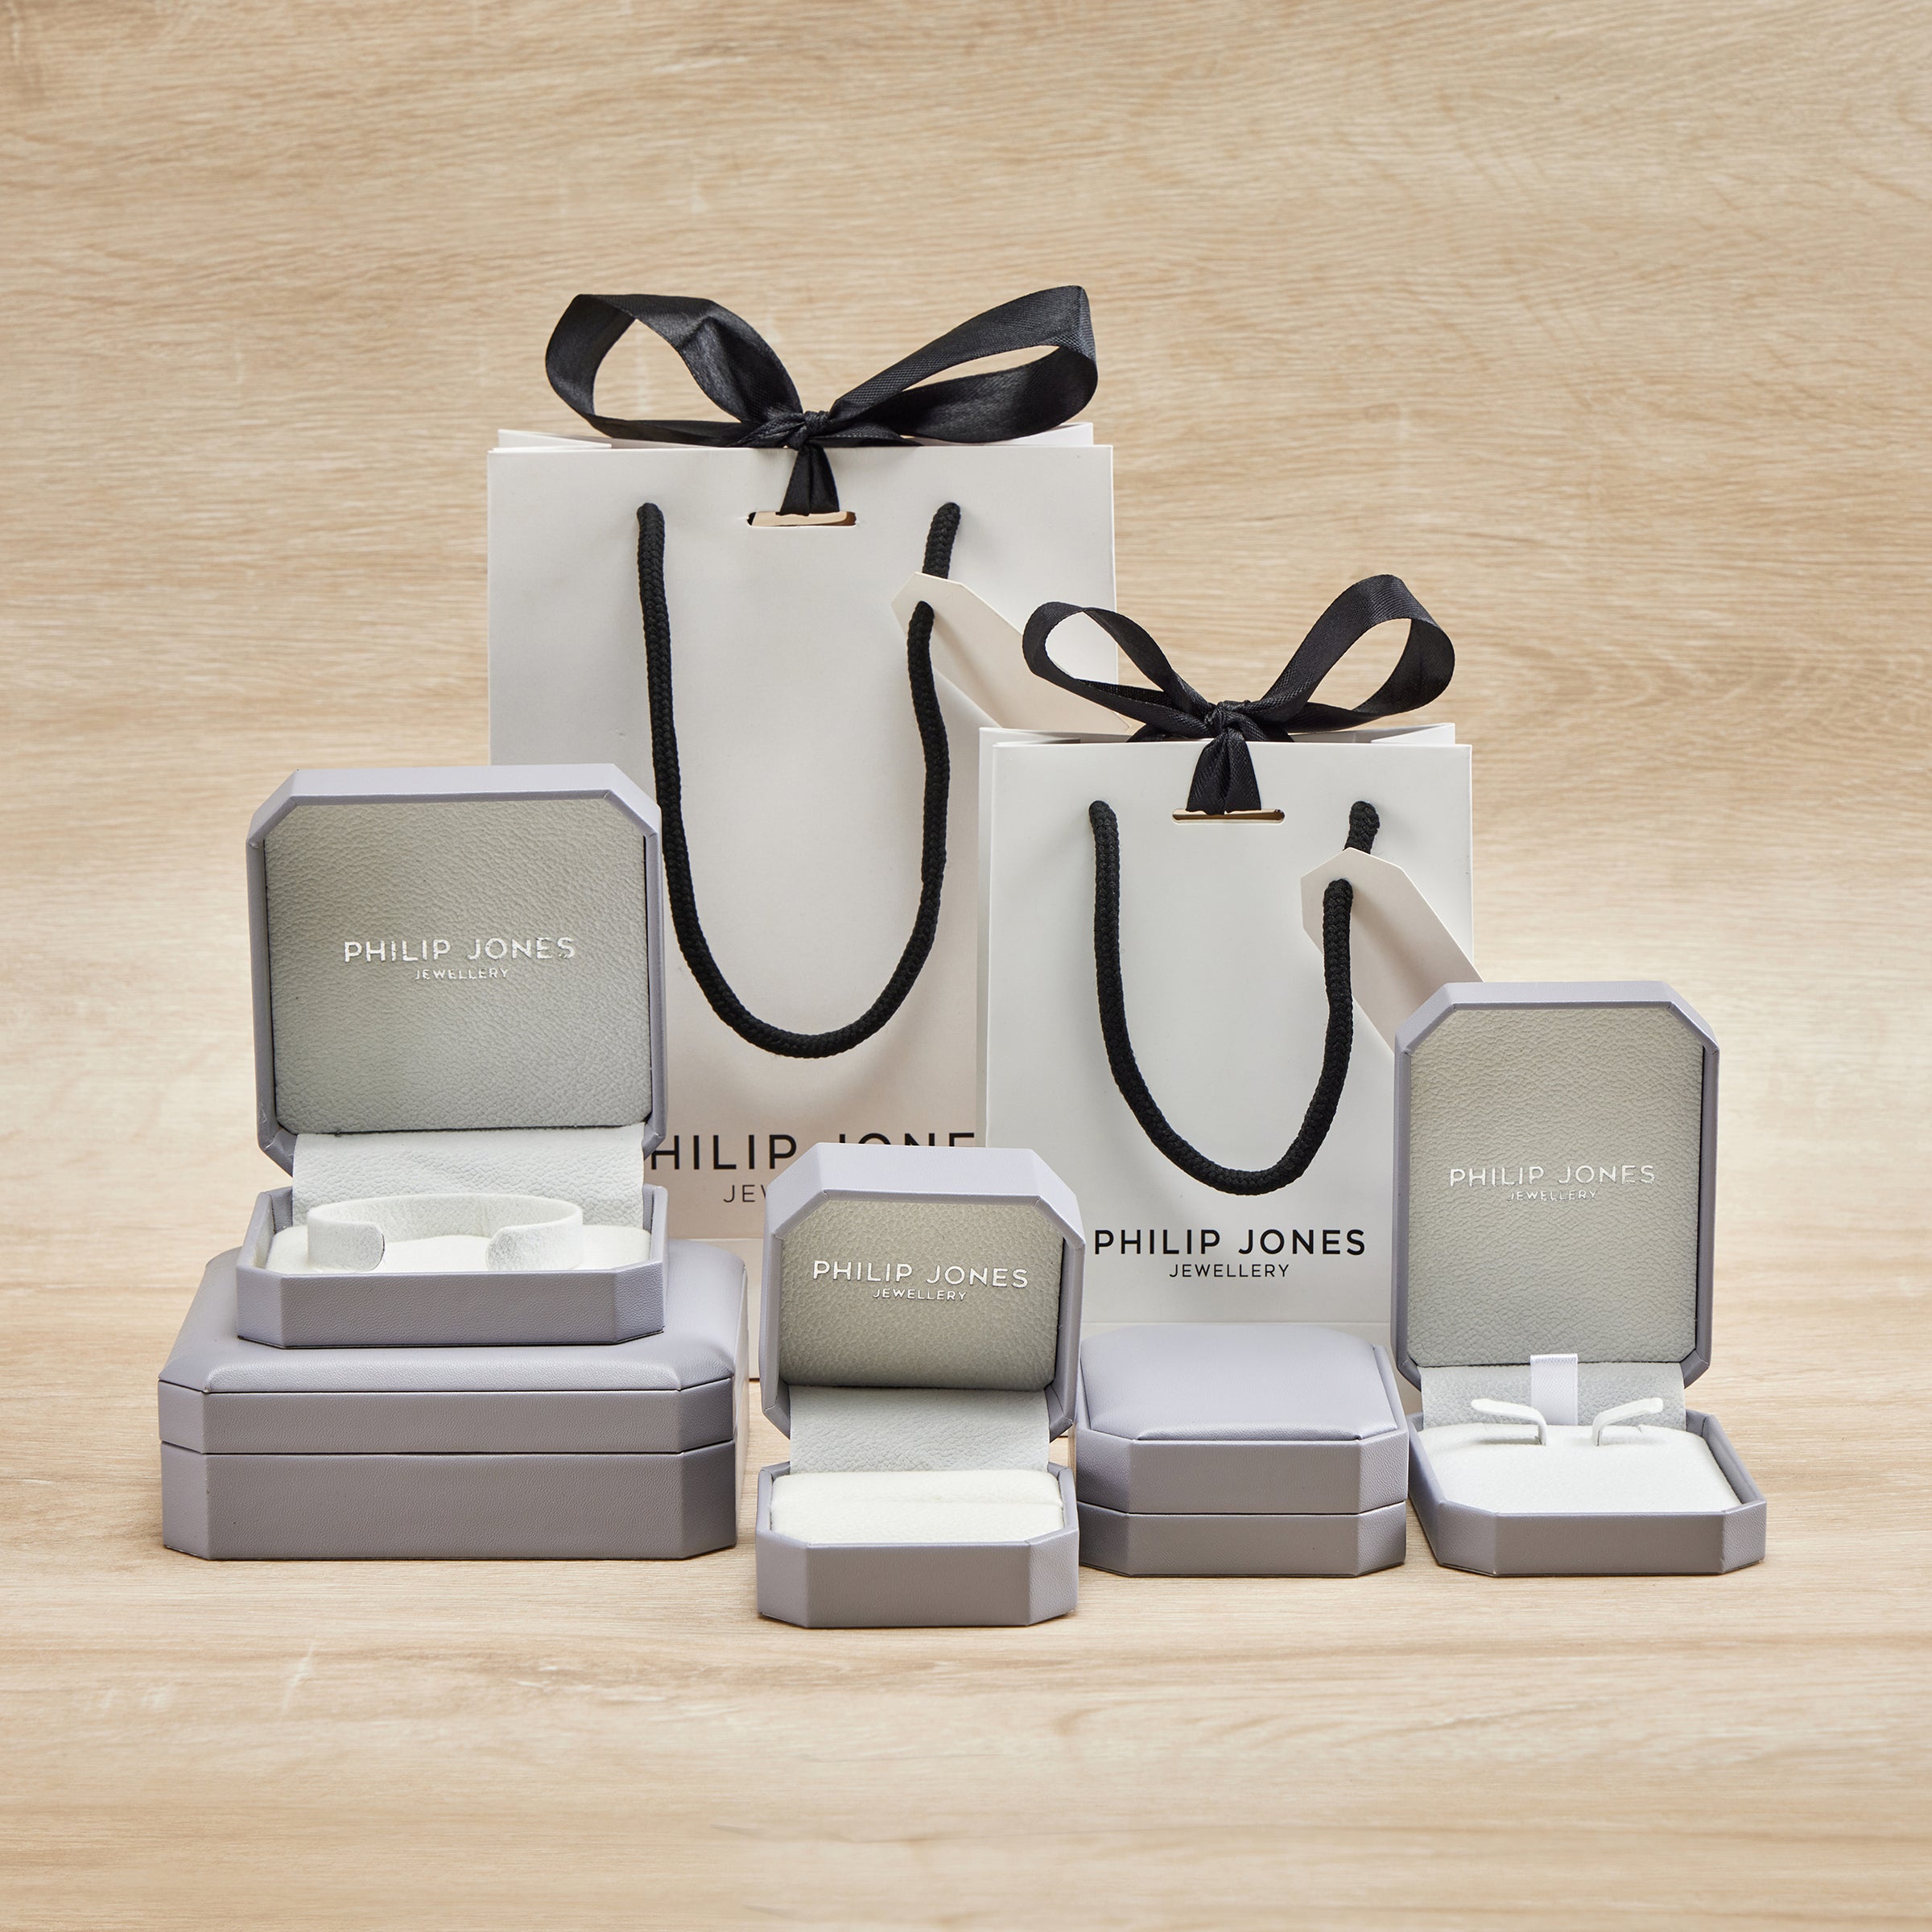 Philip Jones Gift Box, Bag & Polishing Cloth by Philip Jones Jewellery